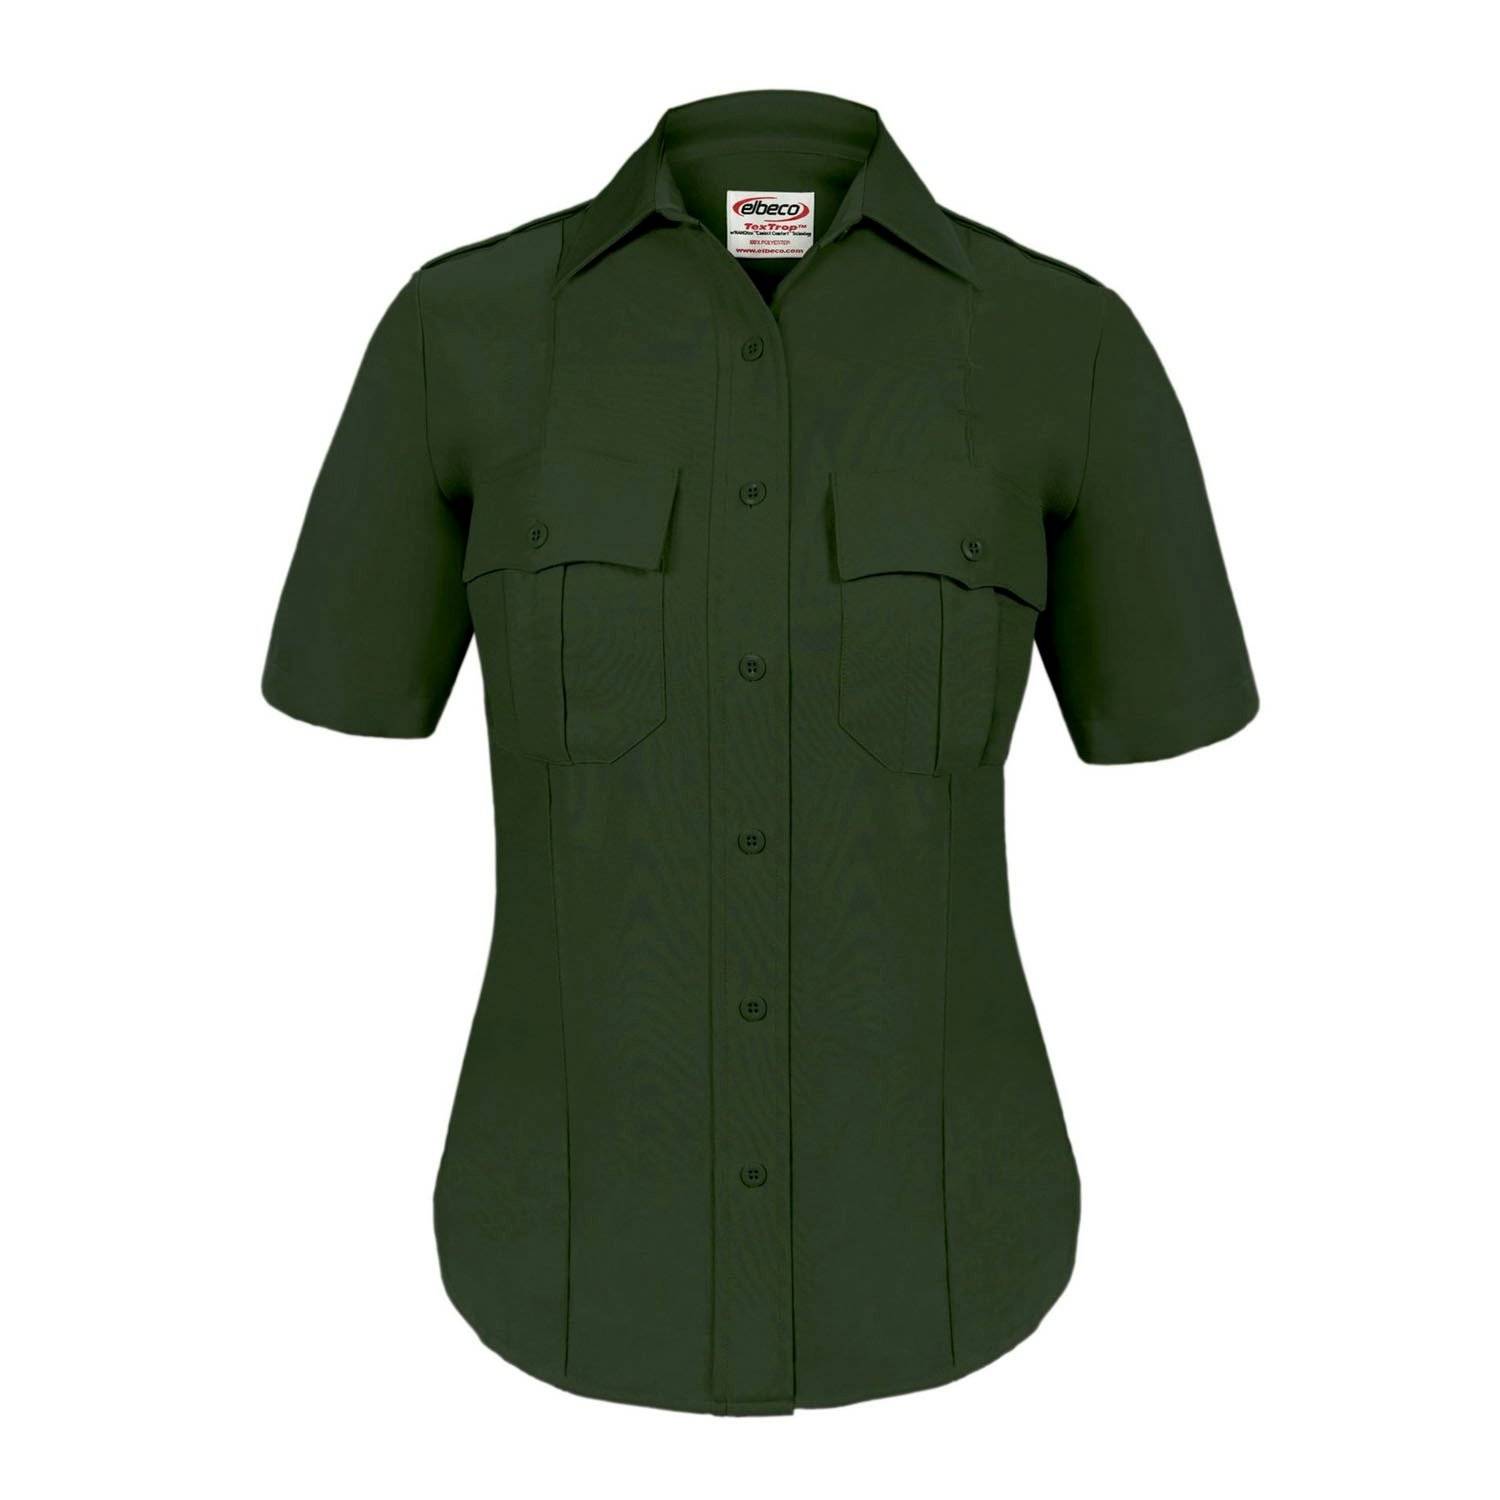 Elbeco Textrop2 Women's S/S Polyester Zipper Shirt - 8804LC